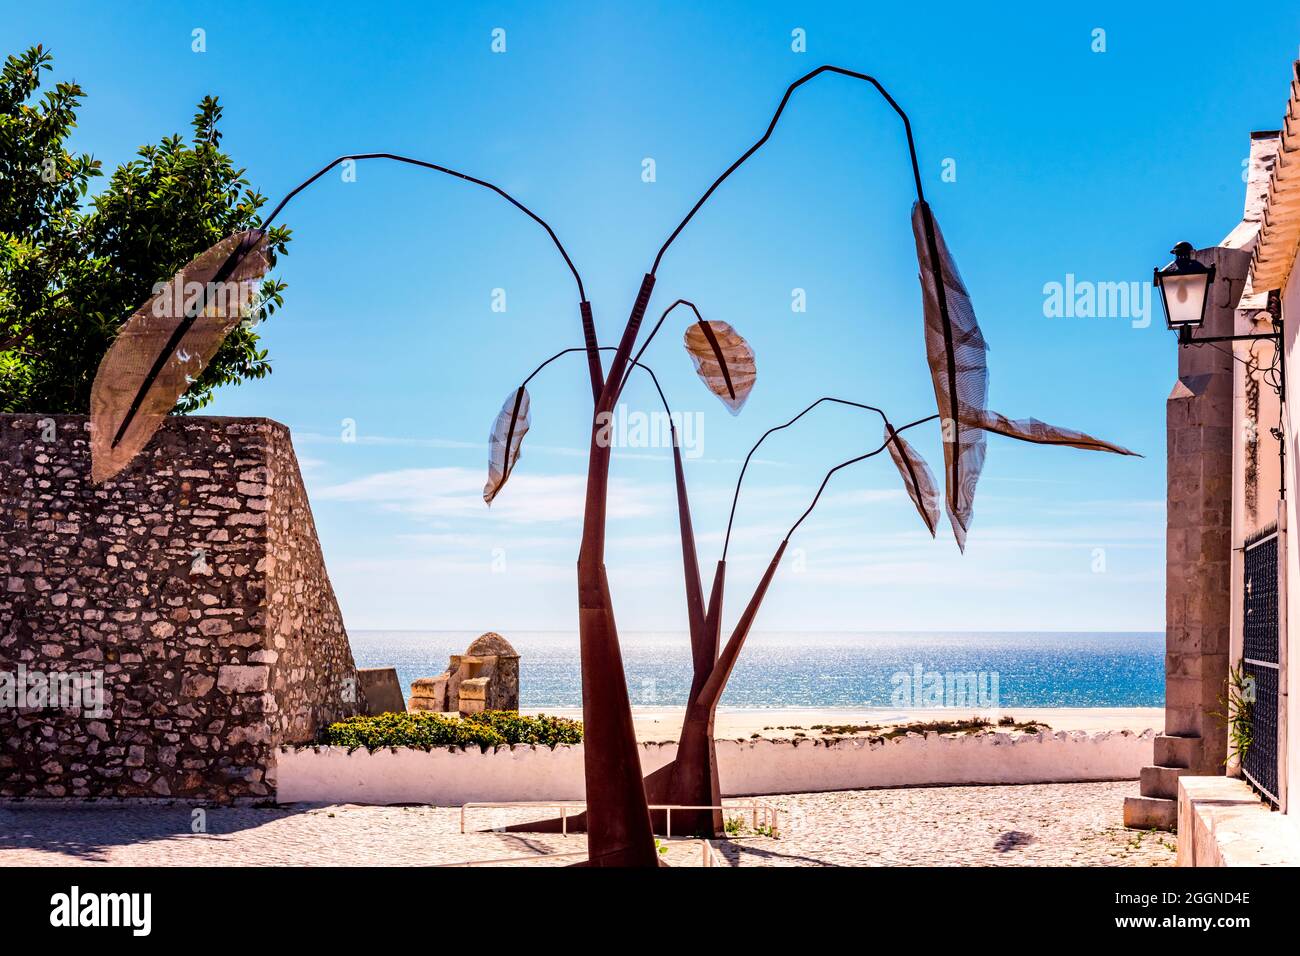 Iron metal tree sculpture sculptures near the sea front seafront Cacela Velha Algarve Portugal Stock Photo